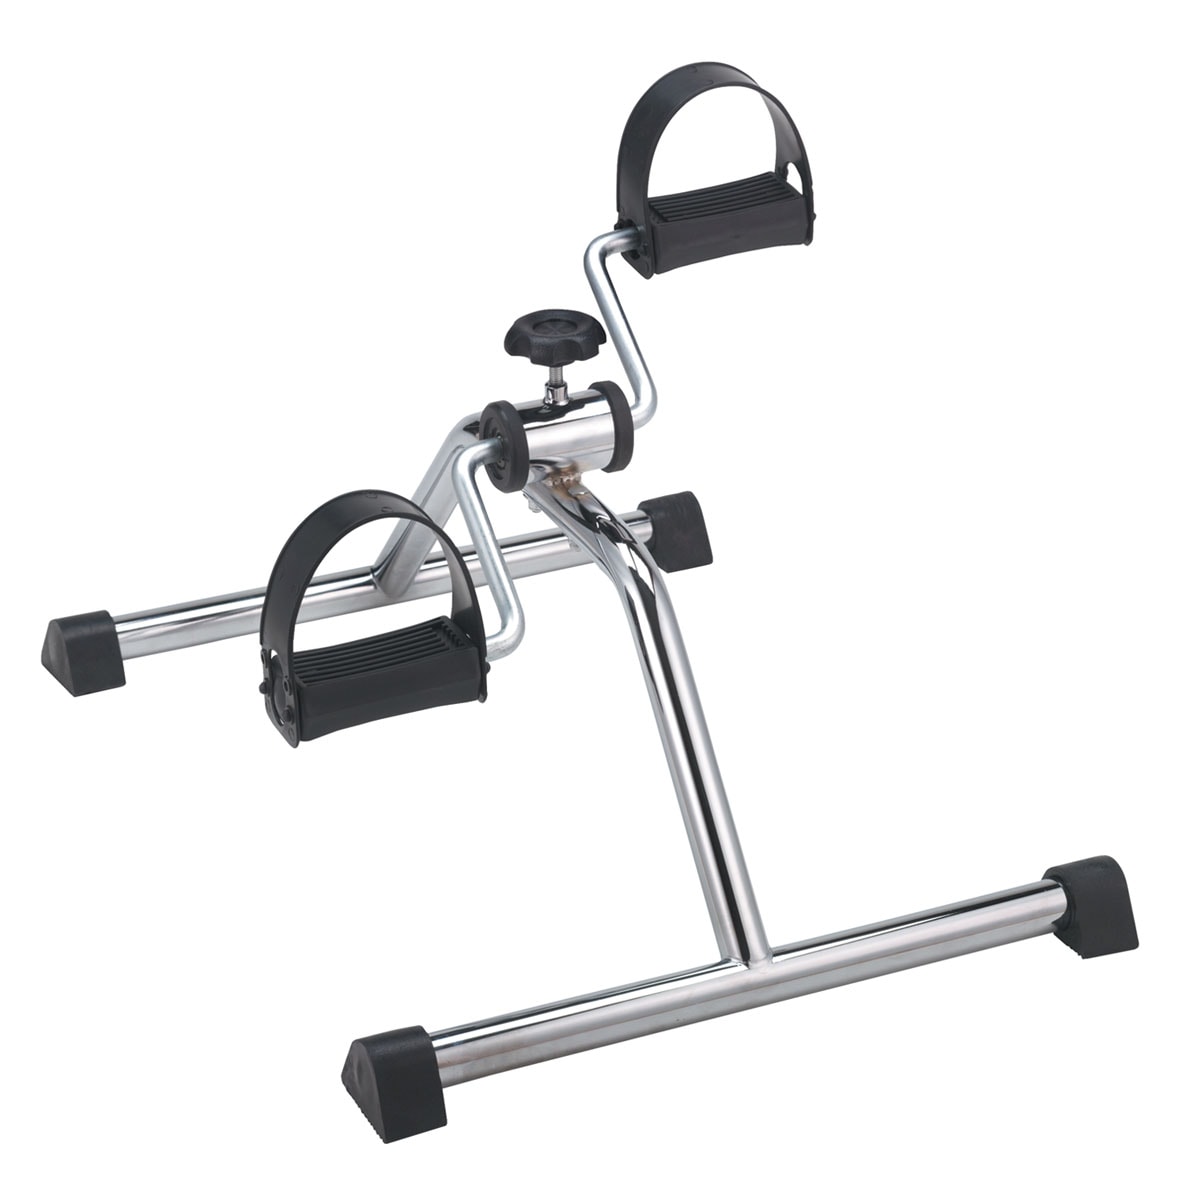 Body Weight Upright Cycle Foldable Exercise Bike | - DMI 660-2008-0099